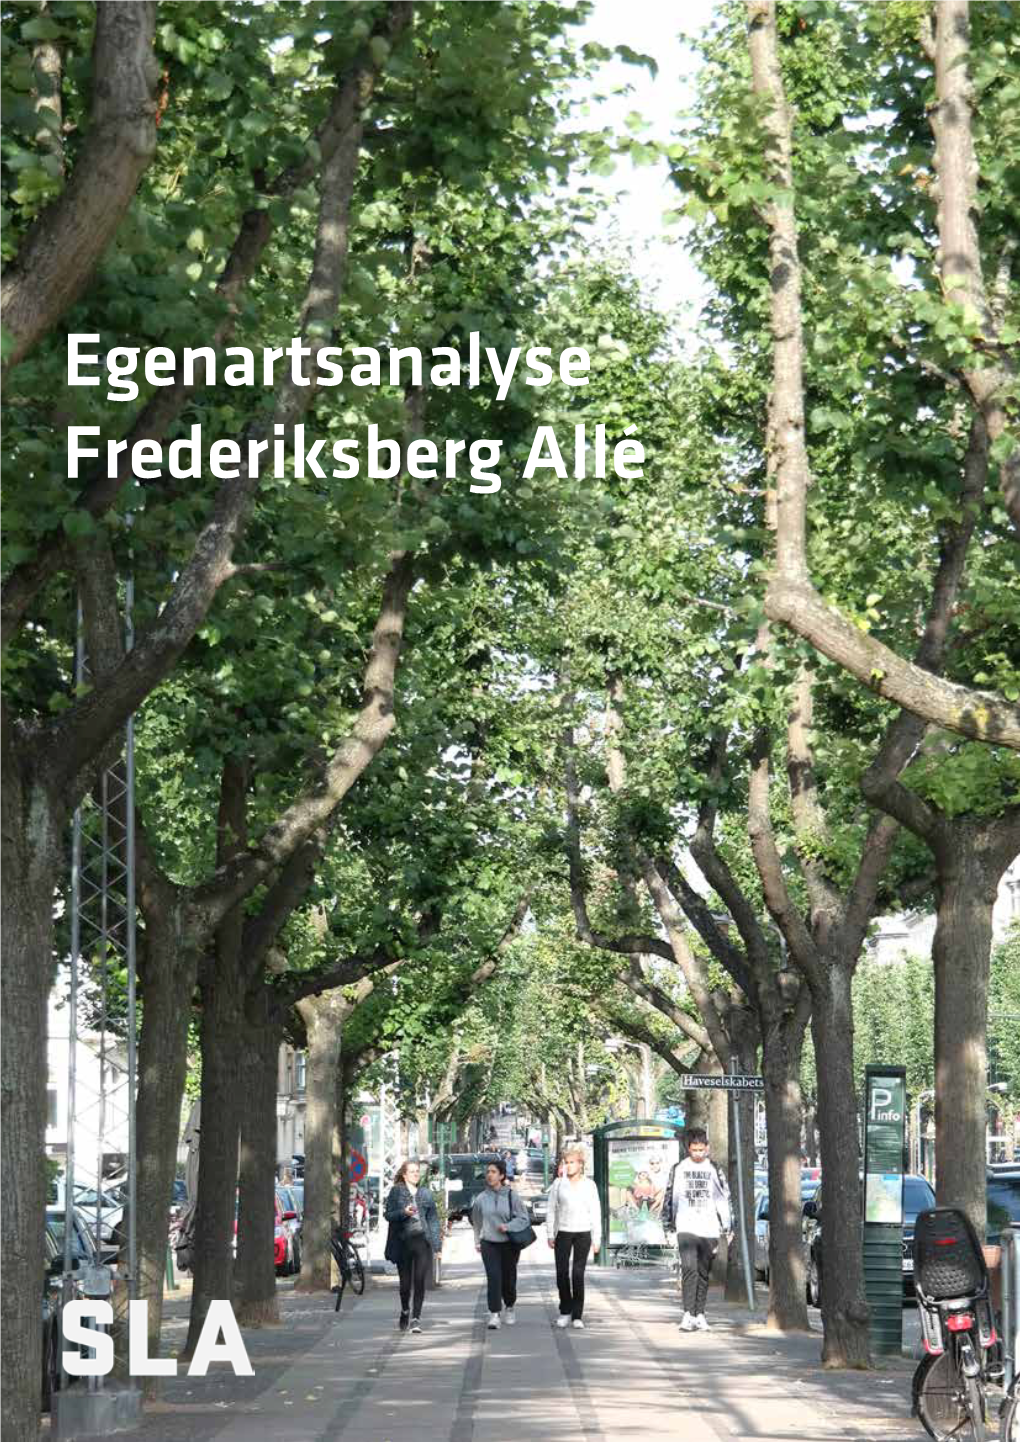 Egenartsanalyse Frederiksberg Allé Egenartsanalyse Af Frederiksberg Allé 2017 Udarbejdet Af SLA for Frederiksberg Kommune